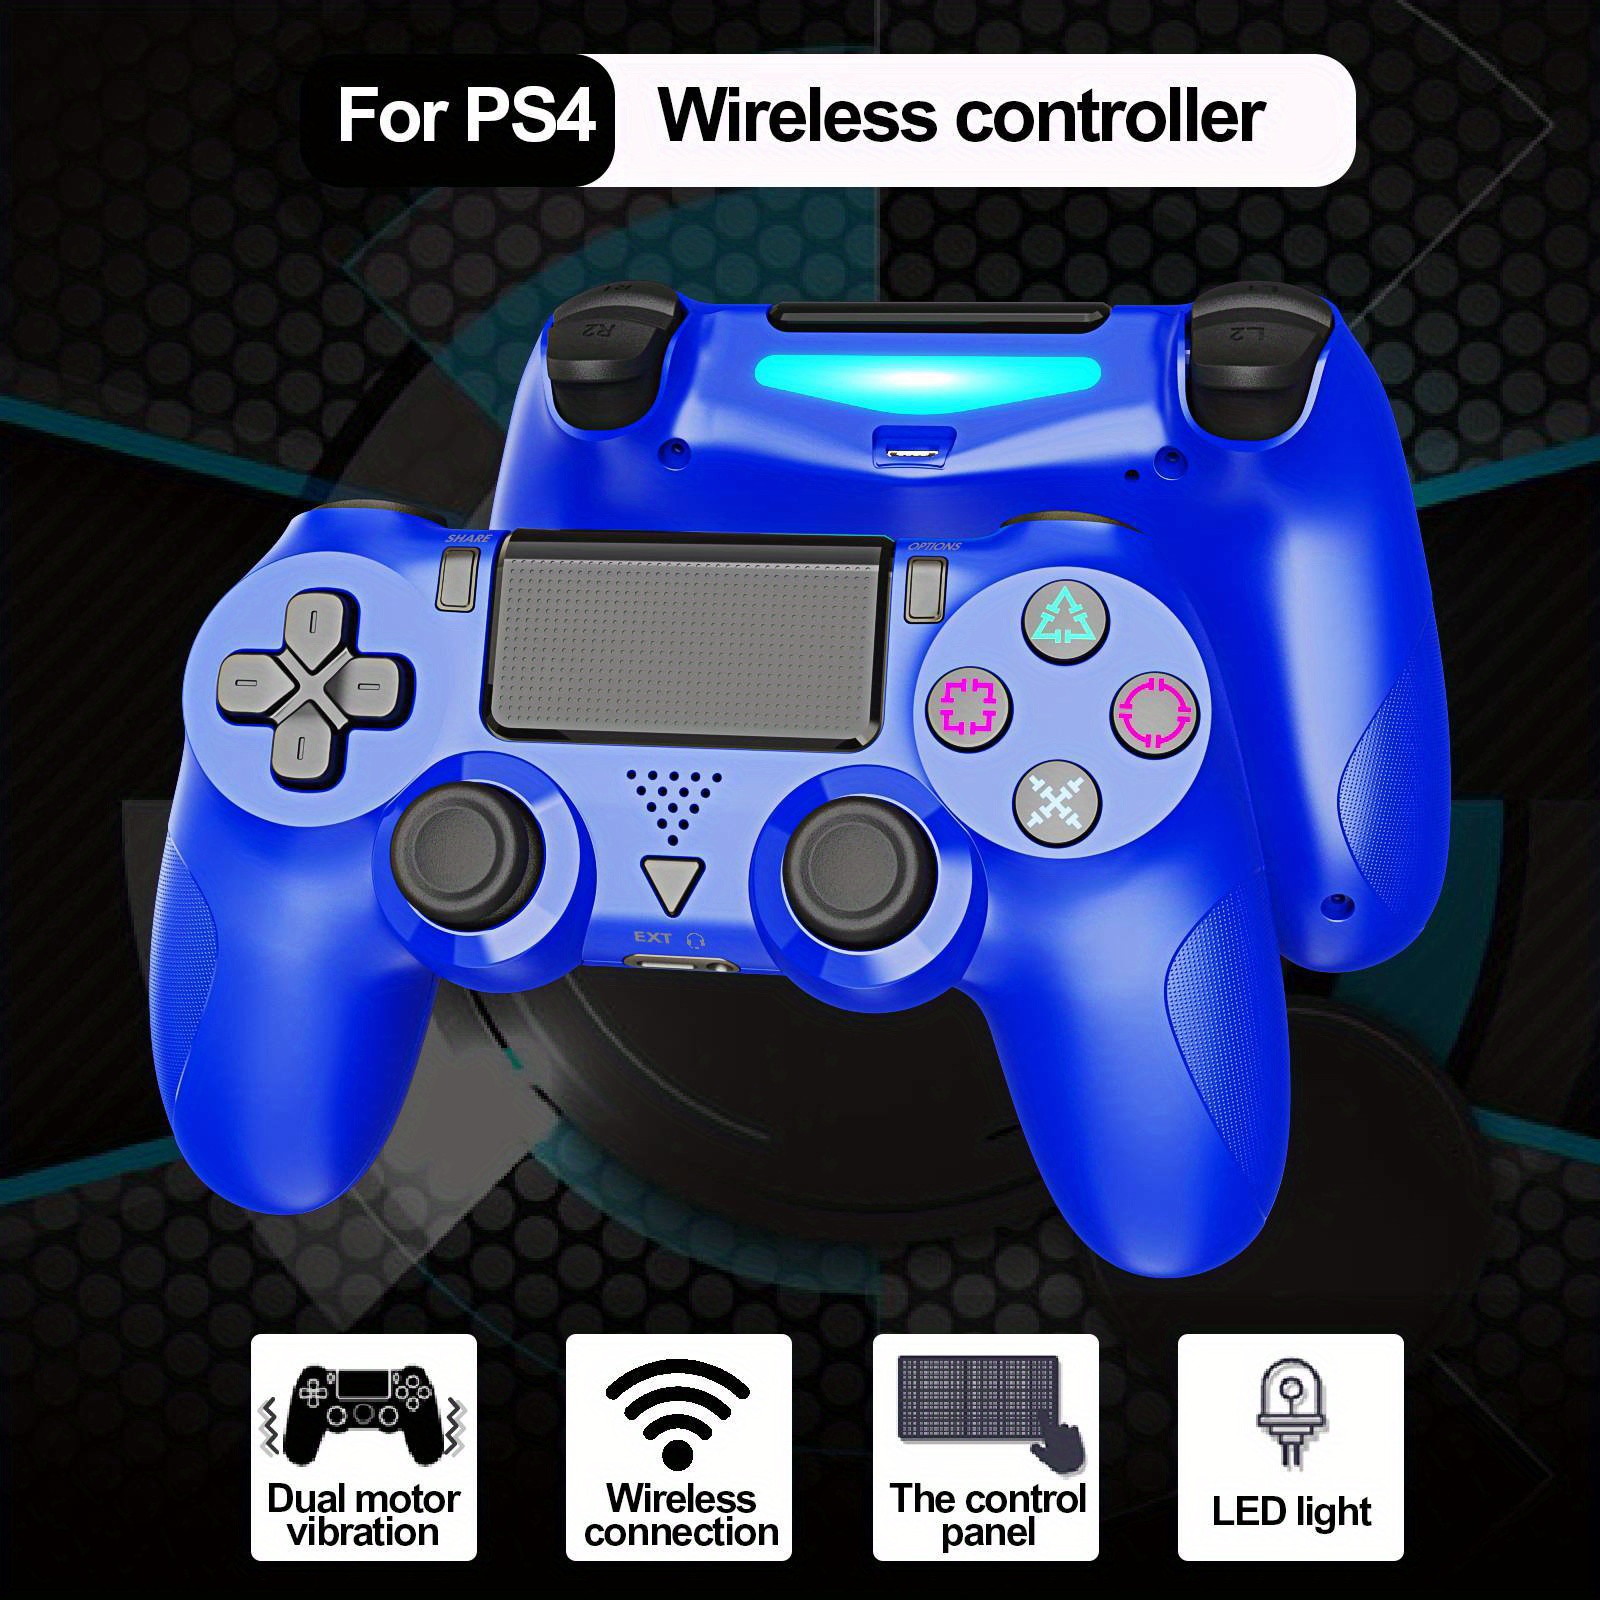 Palanca Ps4 Control Mando Playstation 4 Inalambrico Slim